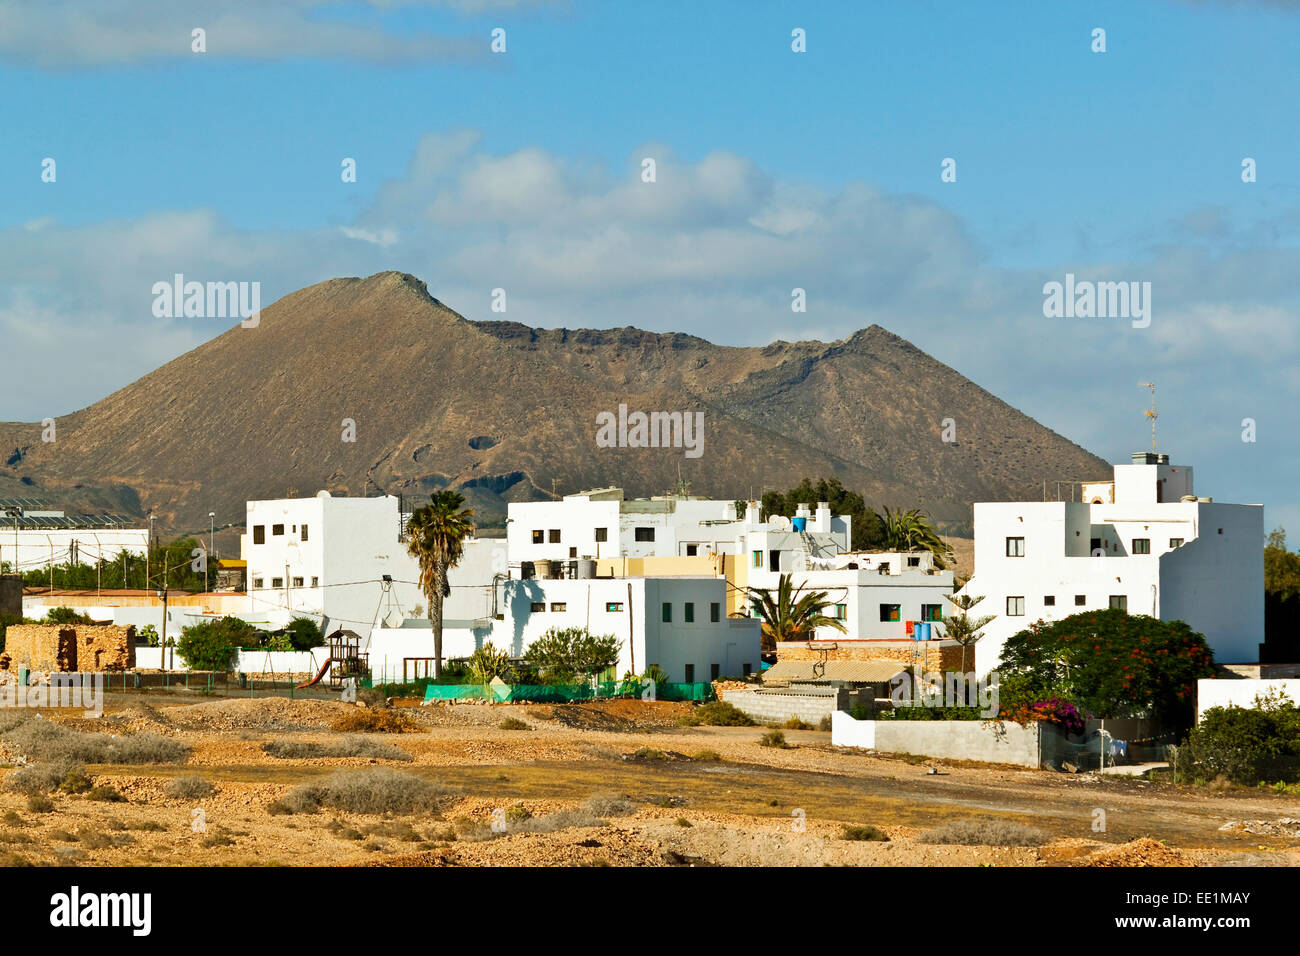 The Caldera de Gairia volcanic cone looms over this town in the central south, Tiscamanita, Fuerteventura, Canary Islands, Spain Stock Photo